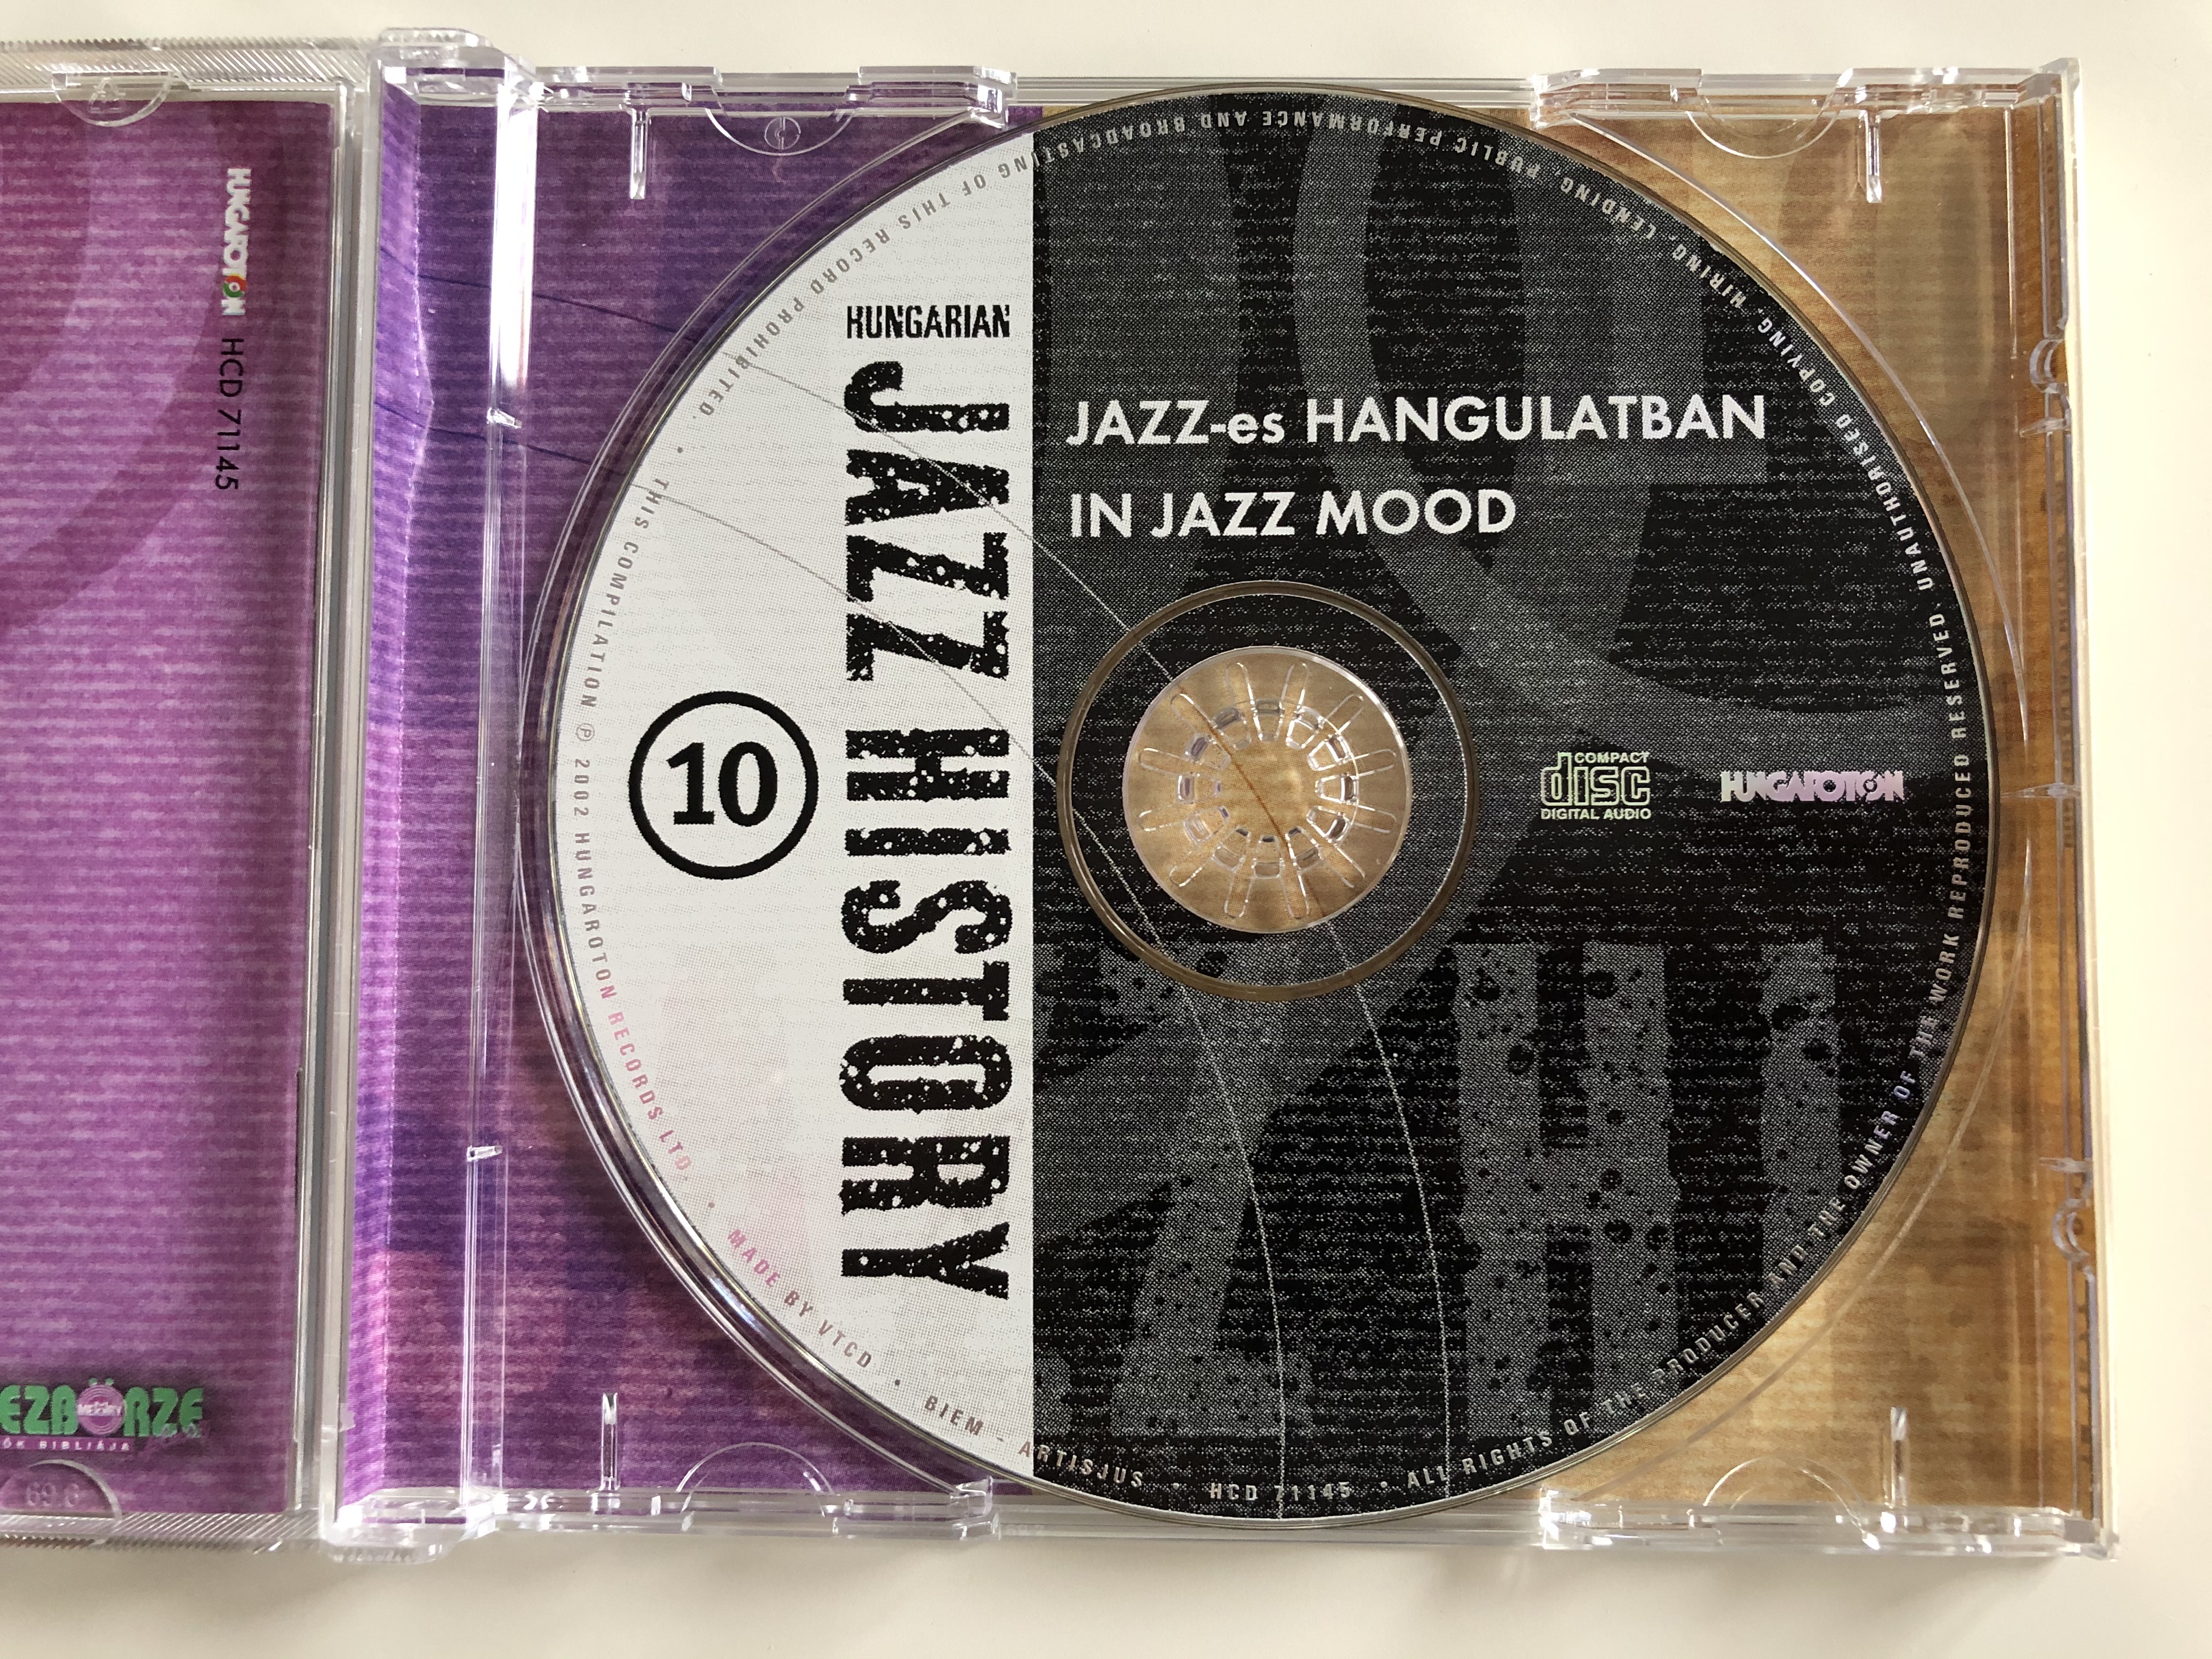 jazz-es-hangulatban-in-jazz-mood-hungarian-jazz-history-10-hungaroton-audio-cd-2002-hcd-71145-7-.jpg